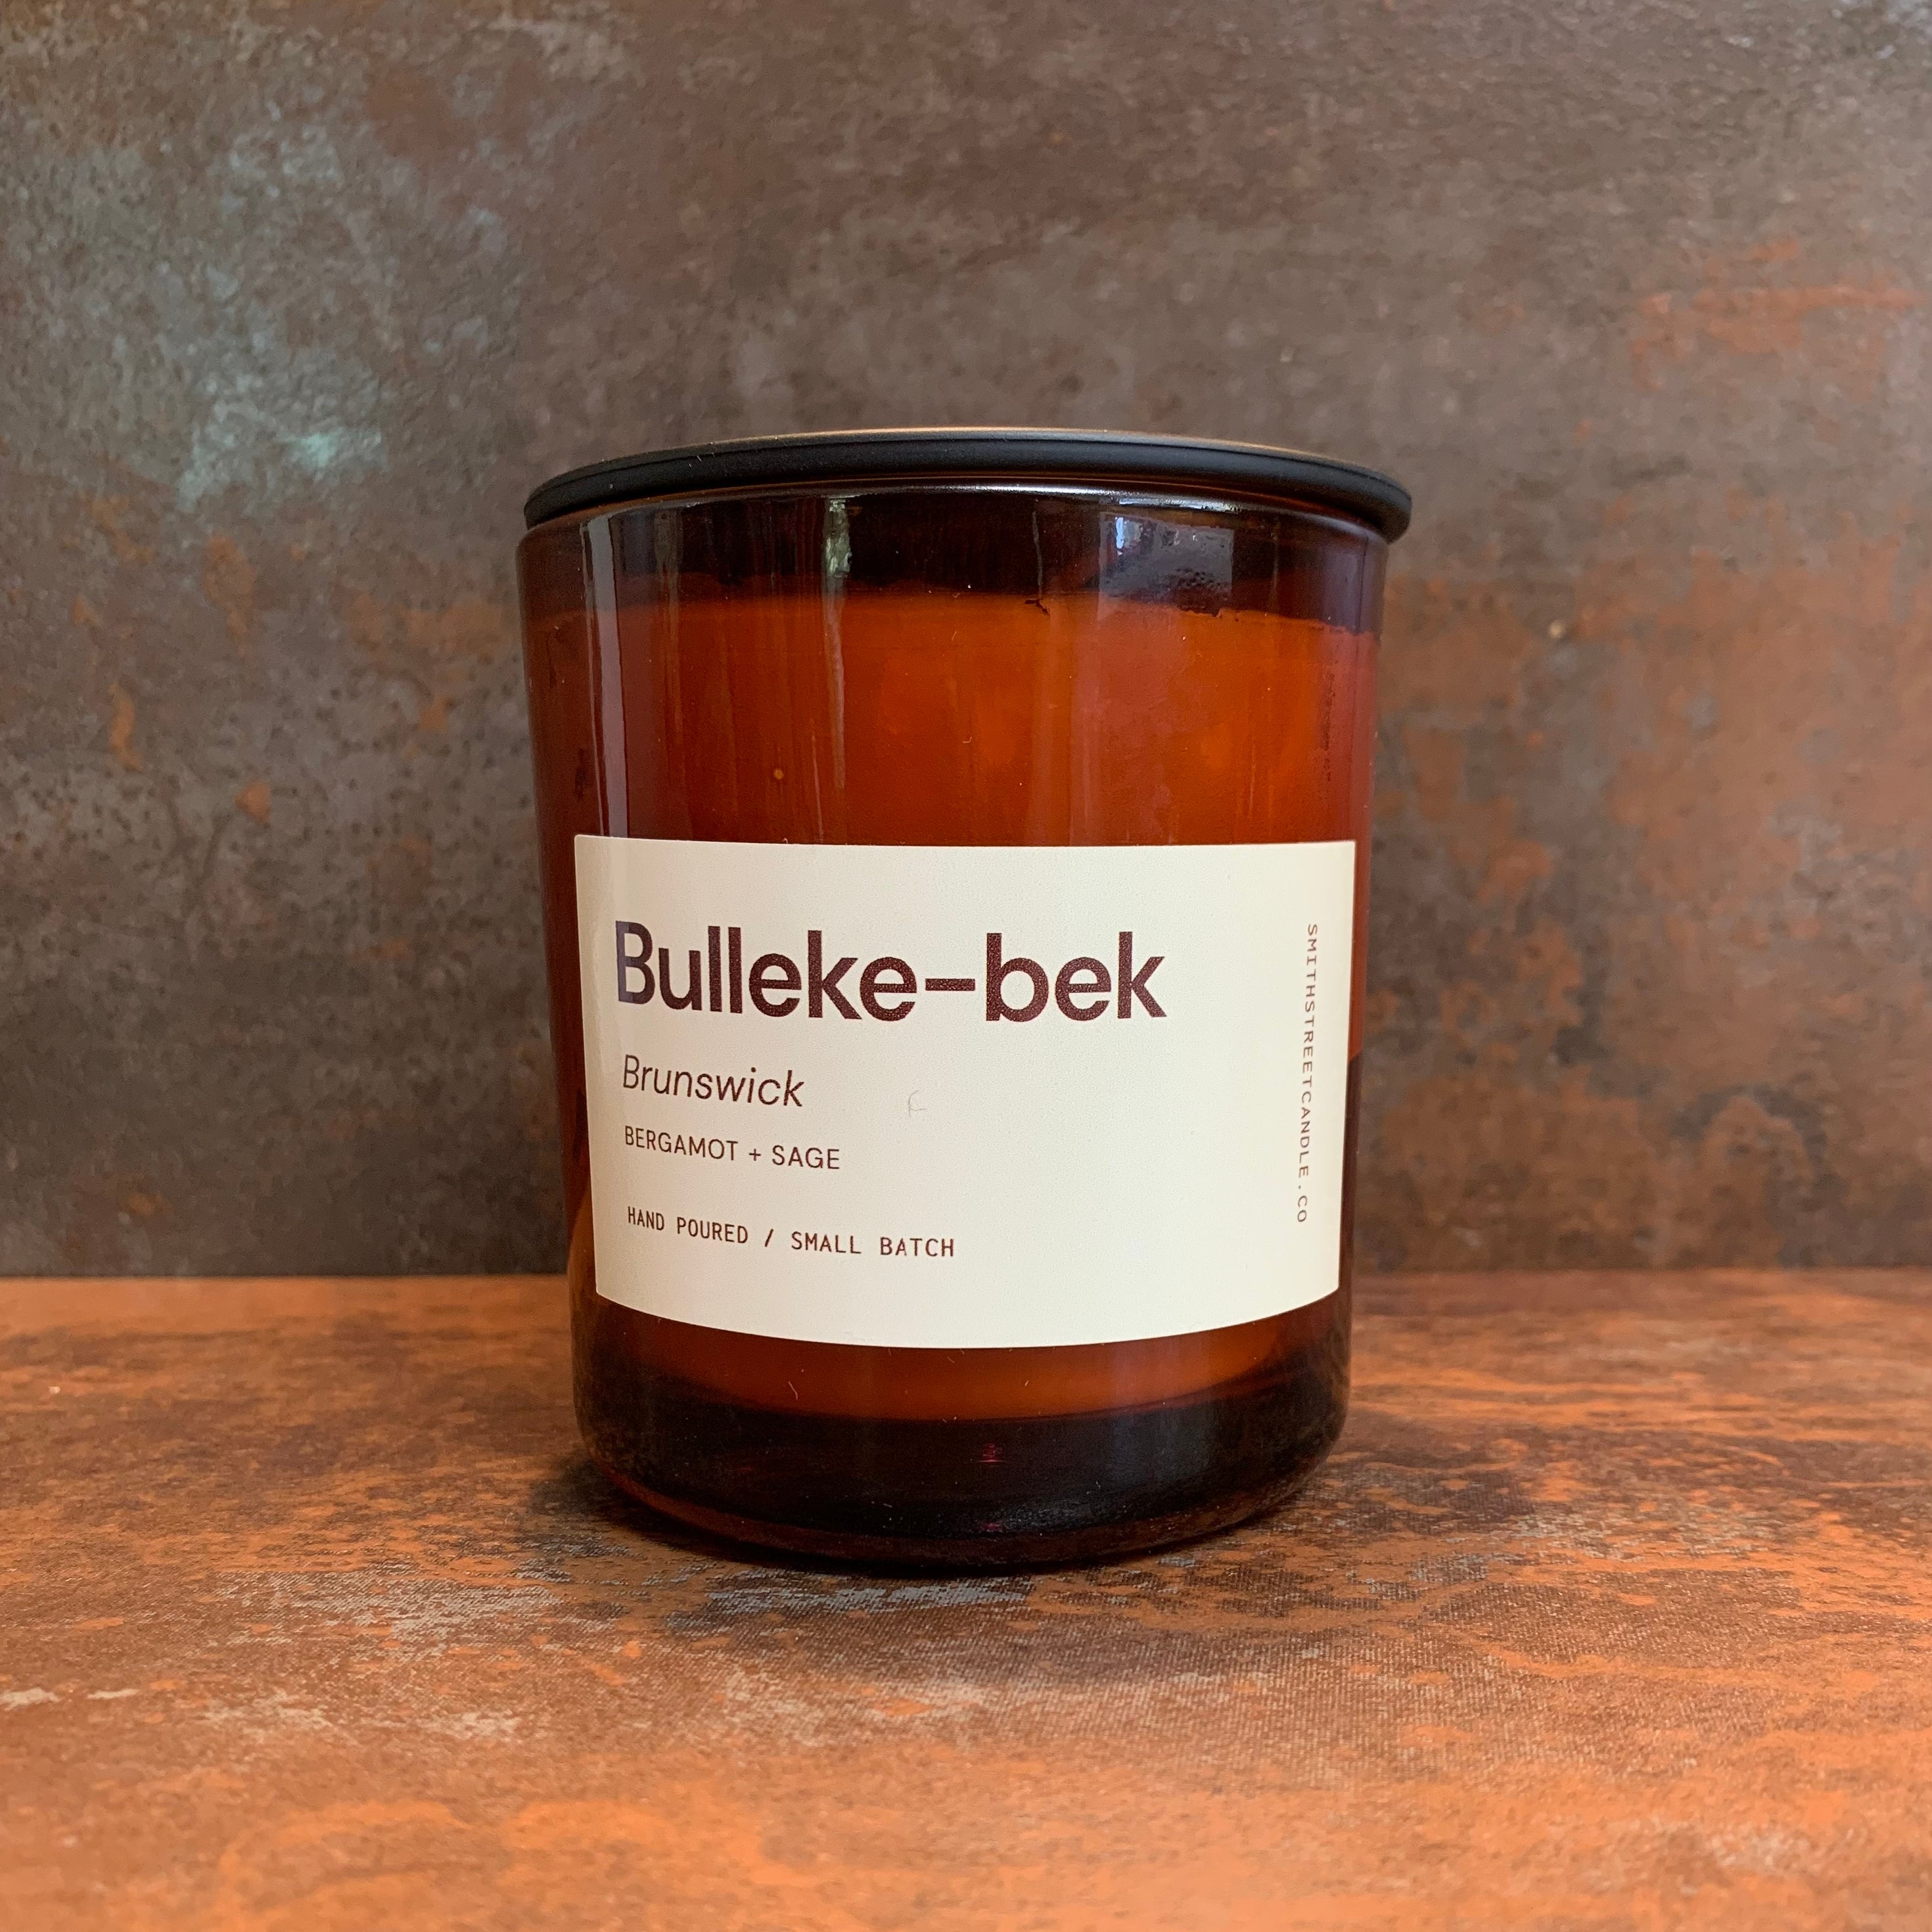 Bulleke-bek (Brunswick) - Gaudy & Prim